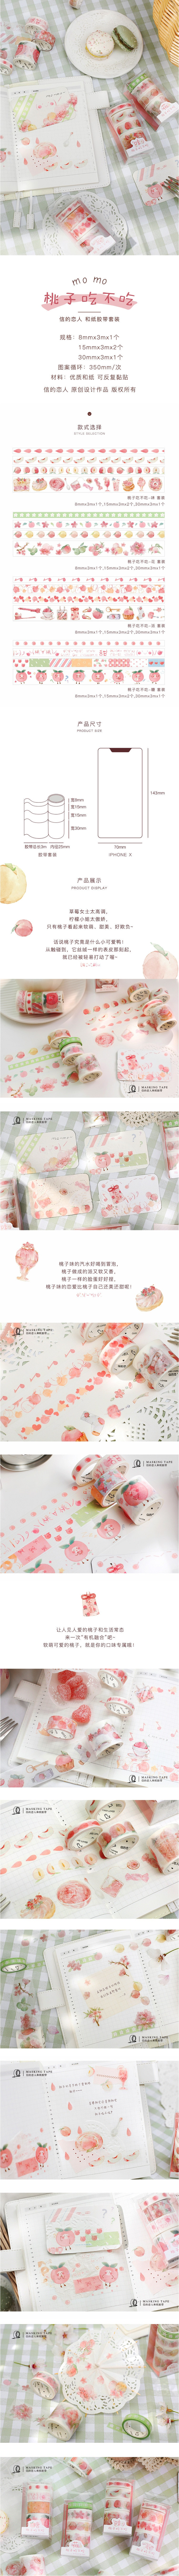 Do not eat peaches Handbook tape suit Flower